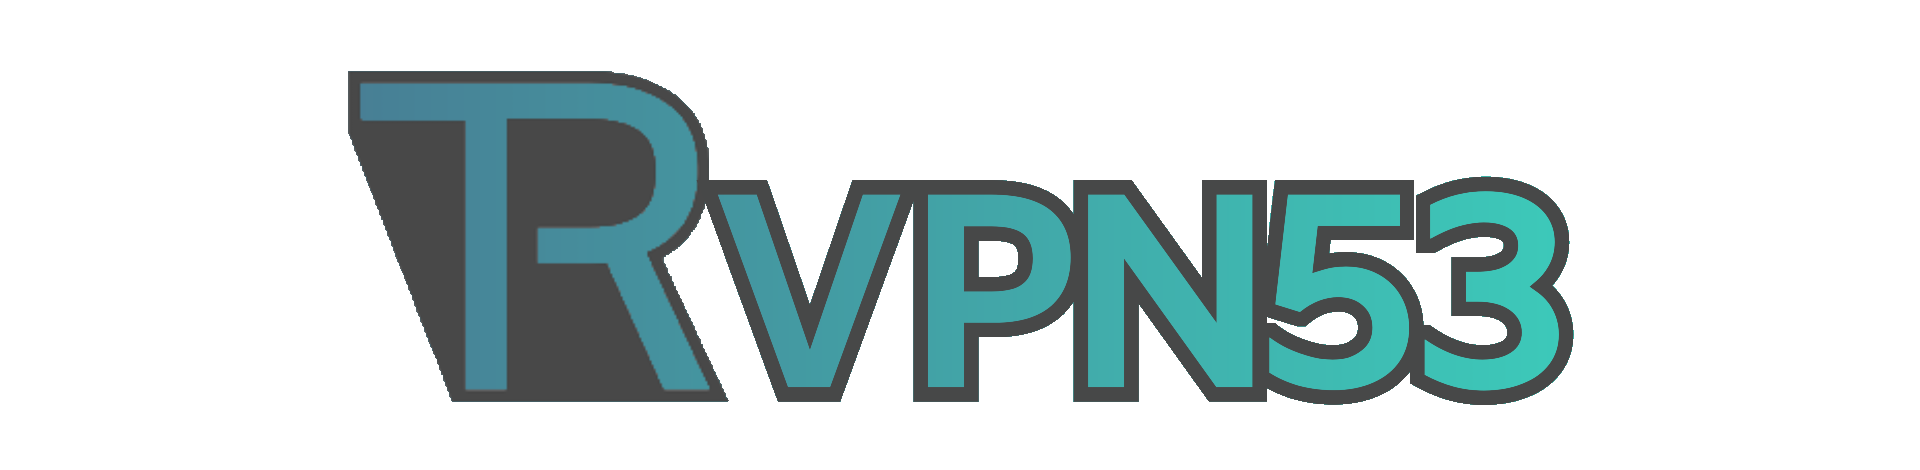 Enter The VPN53!